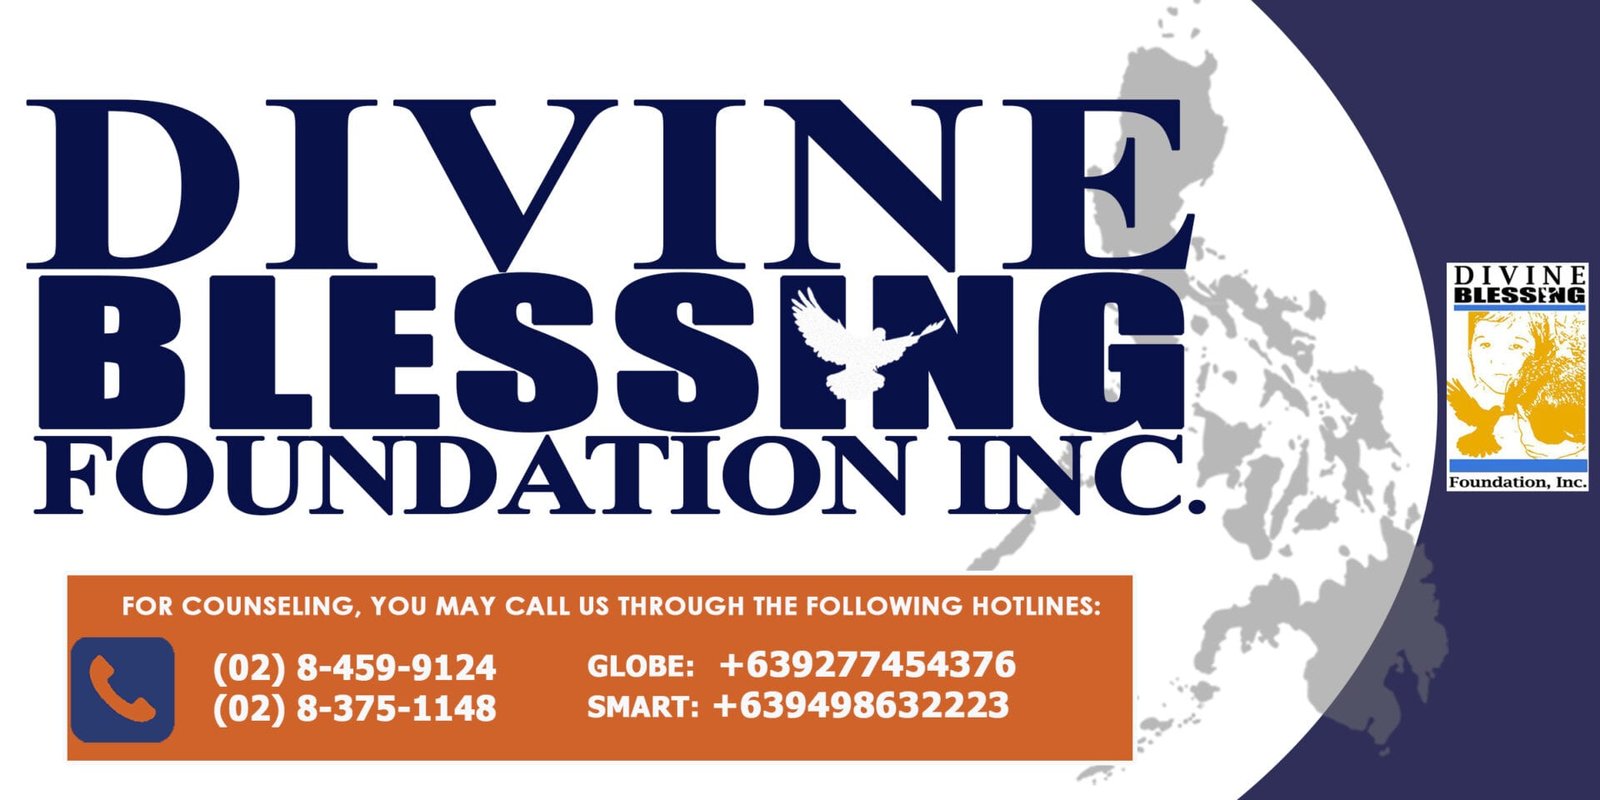 Divine Blessing Foundation